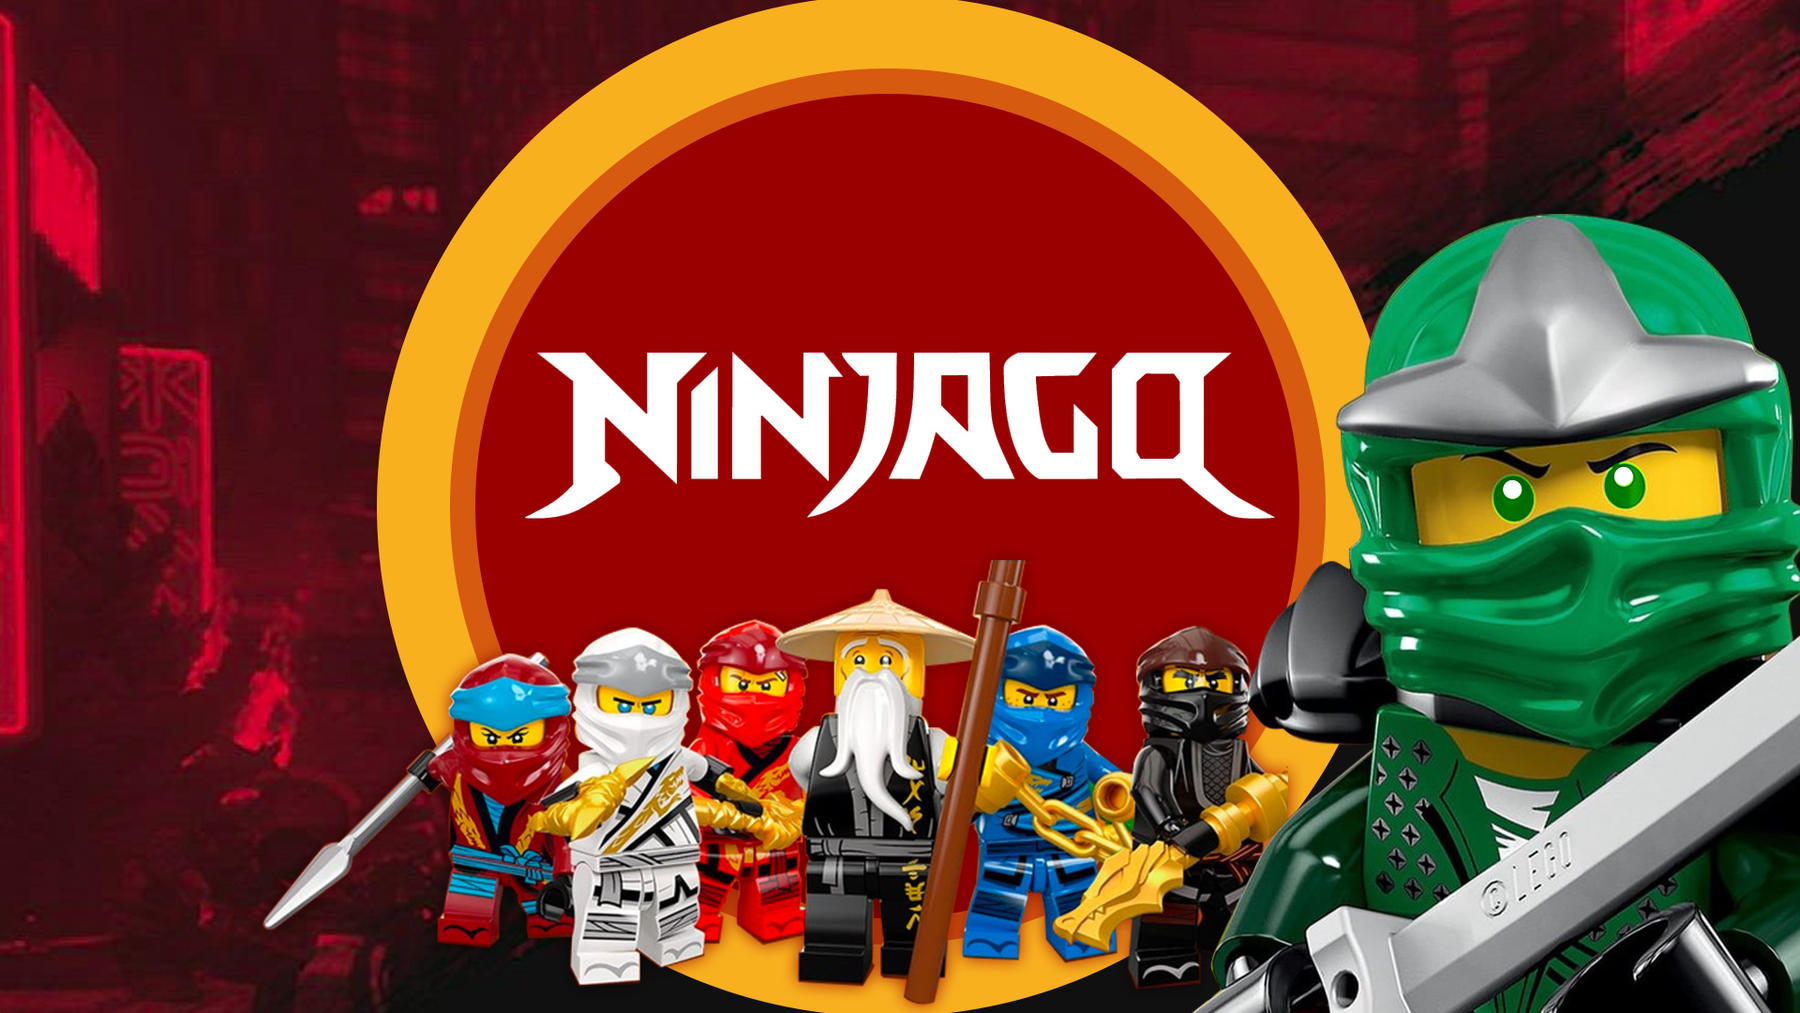 Die Welt der Ninjago